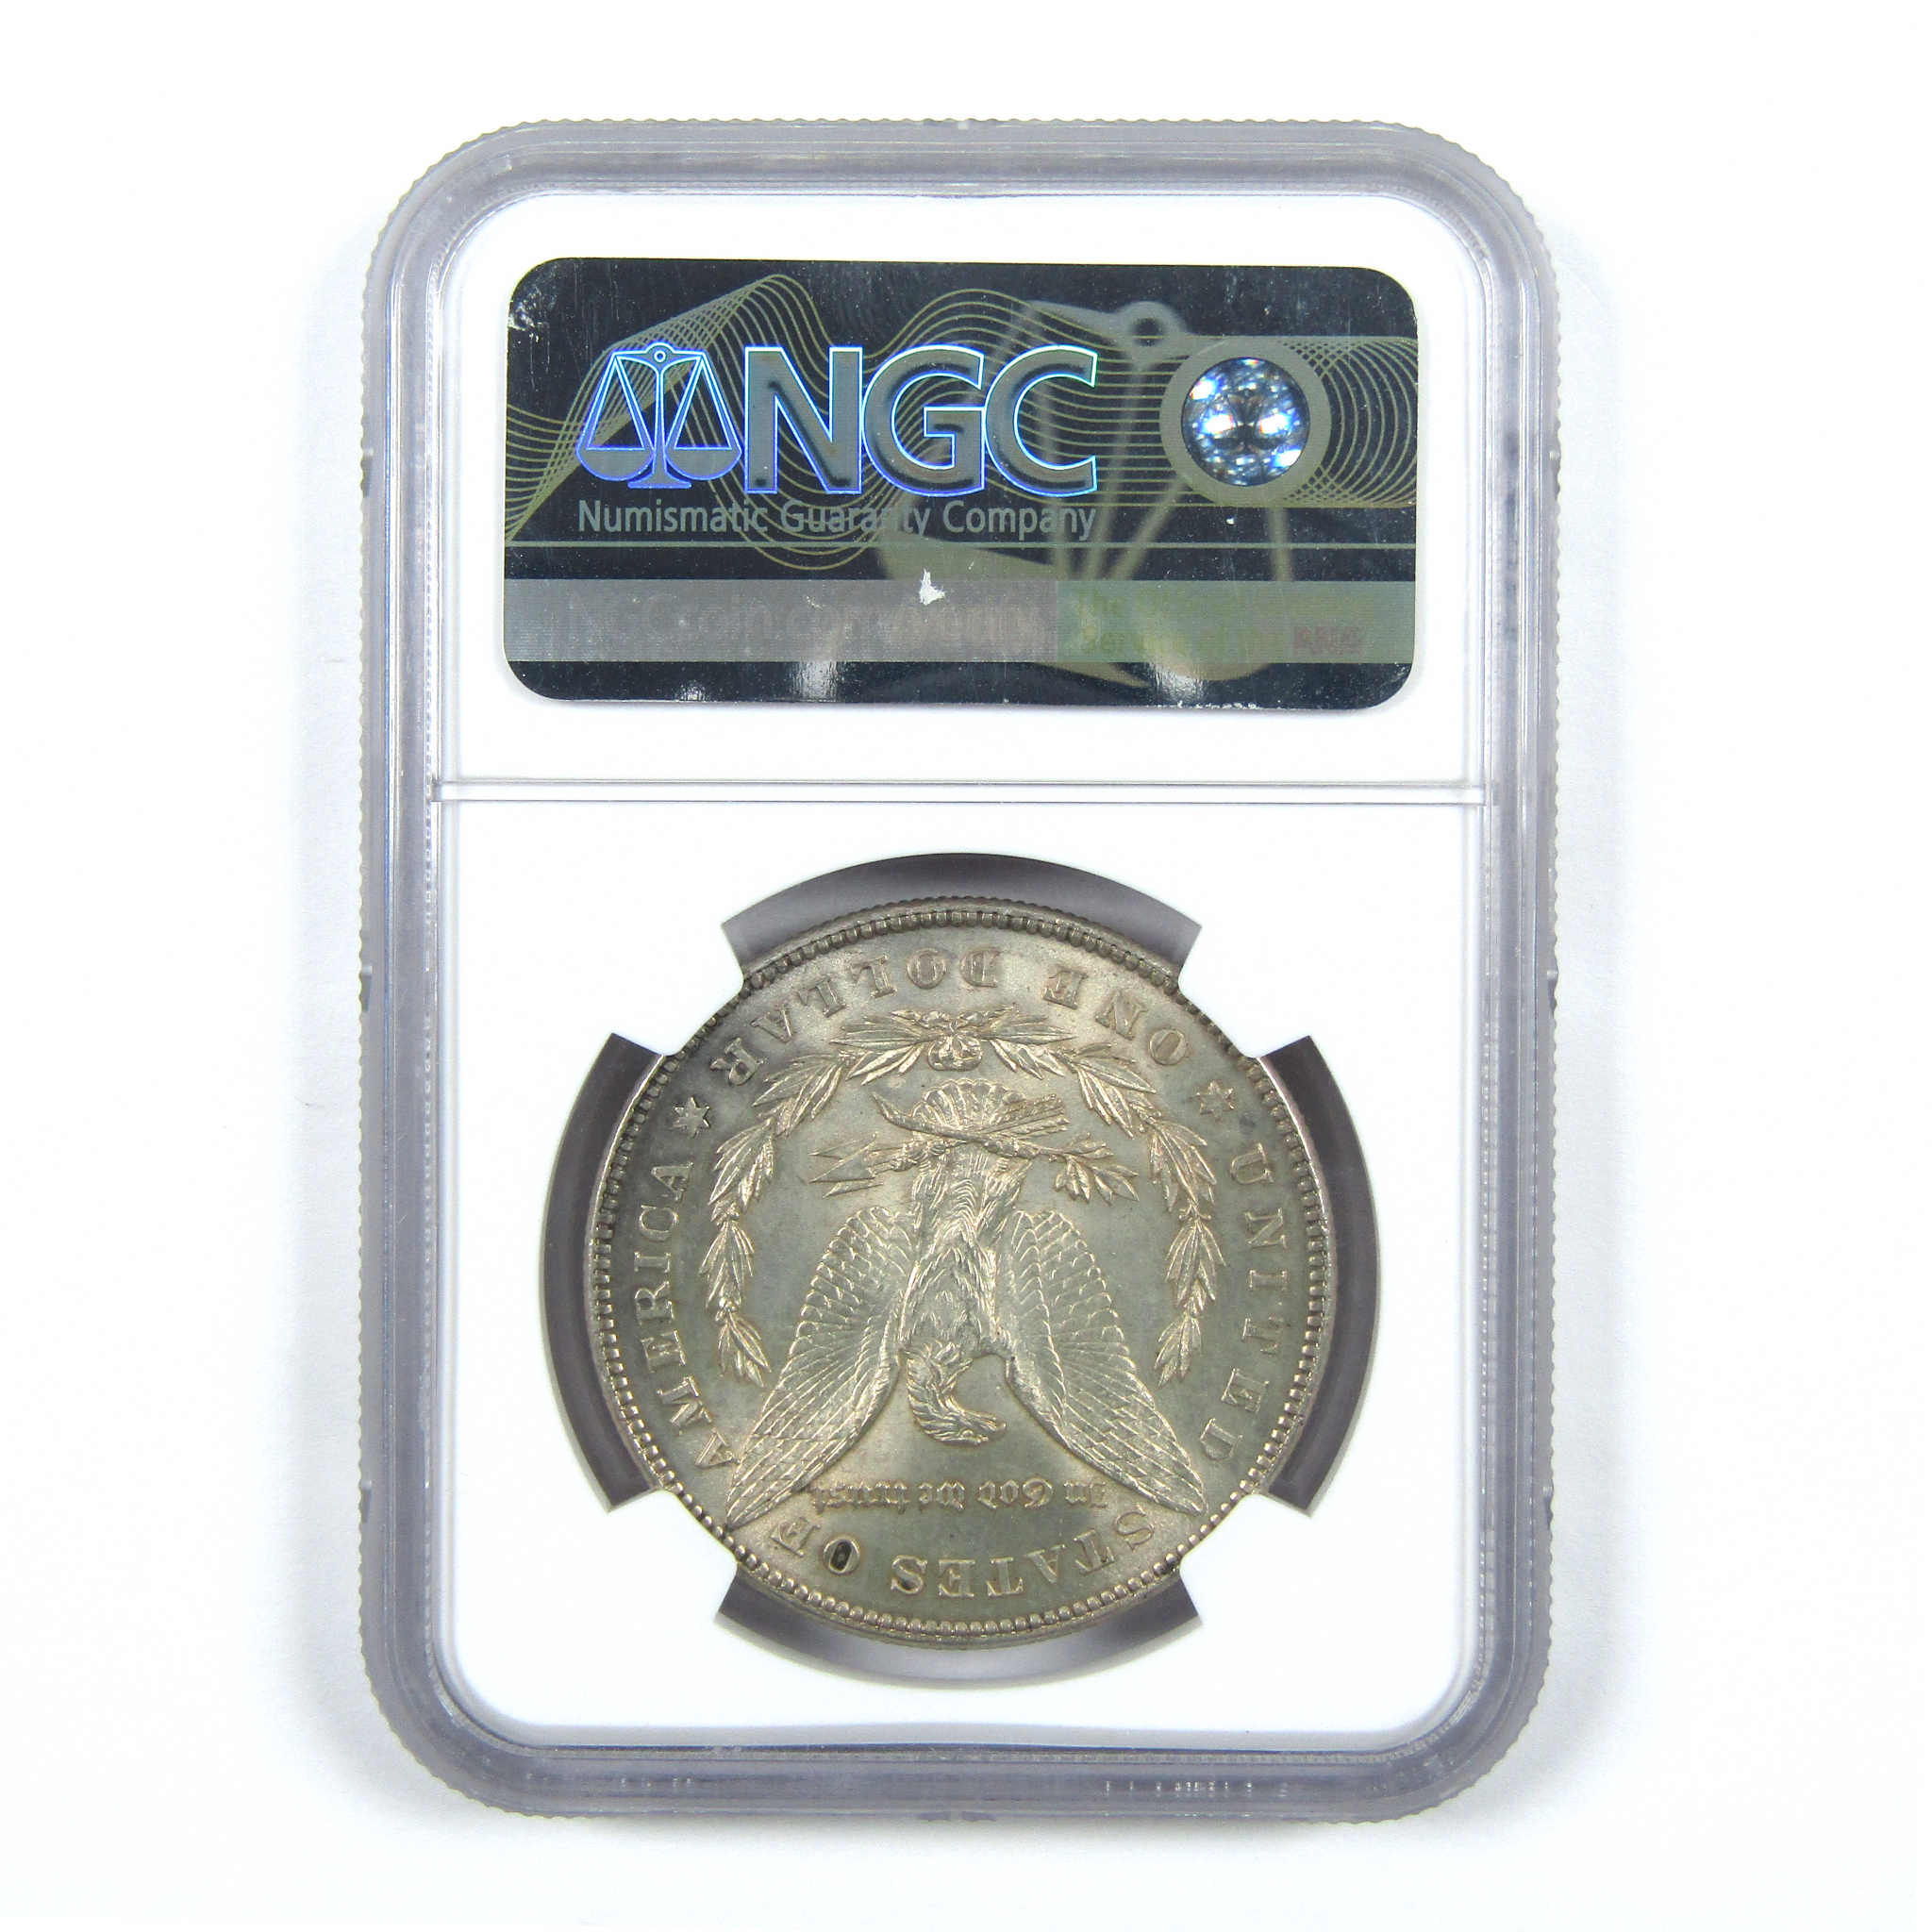 1878 7TF Rev 78 Morgan Dollar MS 63 NGC Silver $1 Coin SKU:I11787 - Morgan coin - Morgan silver dollar - Morgan silver dollar for sale - Profile Coins &amp; Collectibles